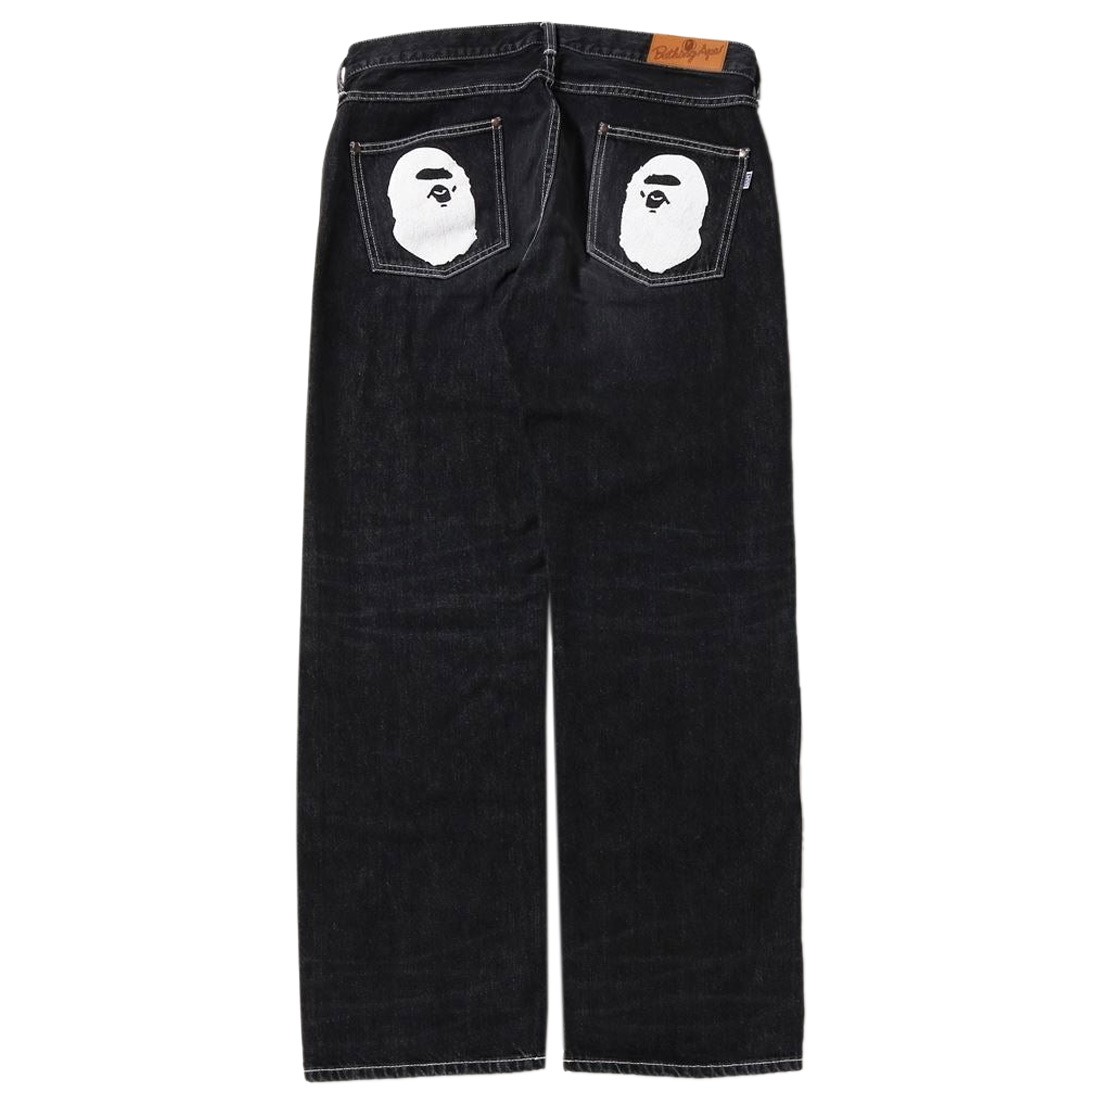 Buy Denim Jeans - Trousers & Shorts